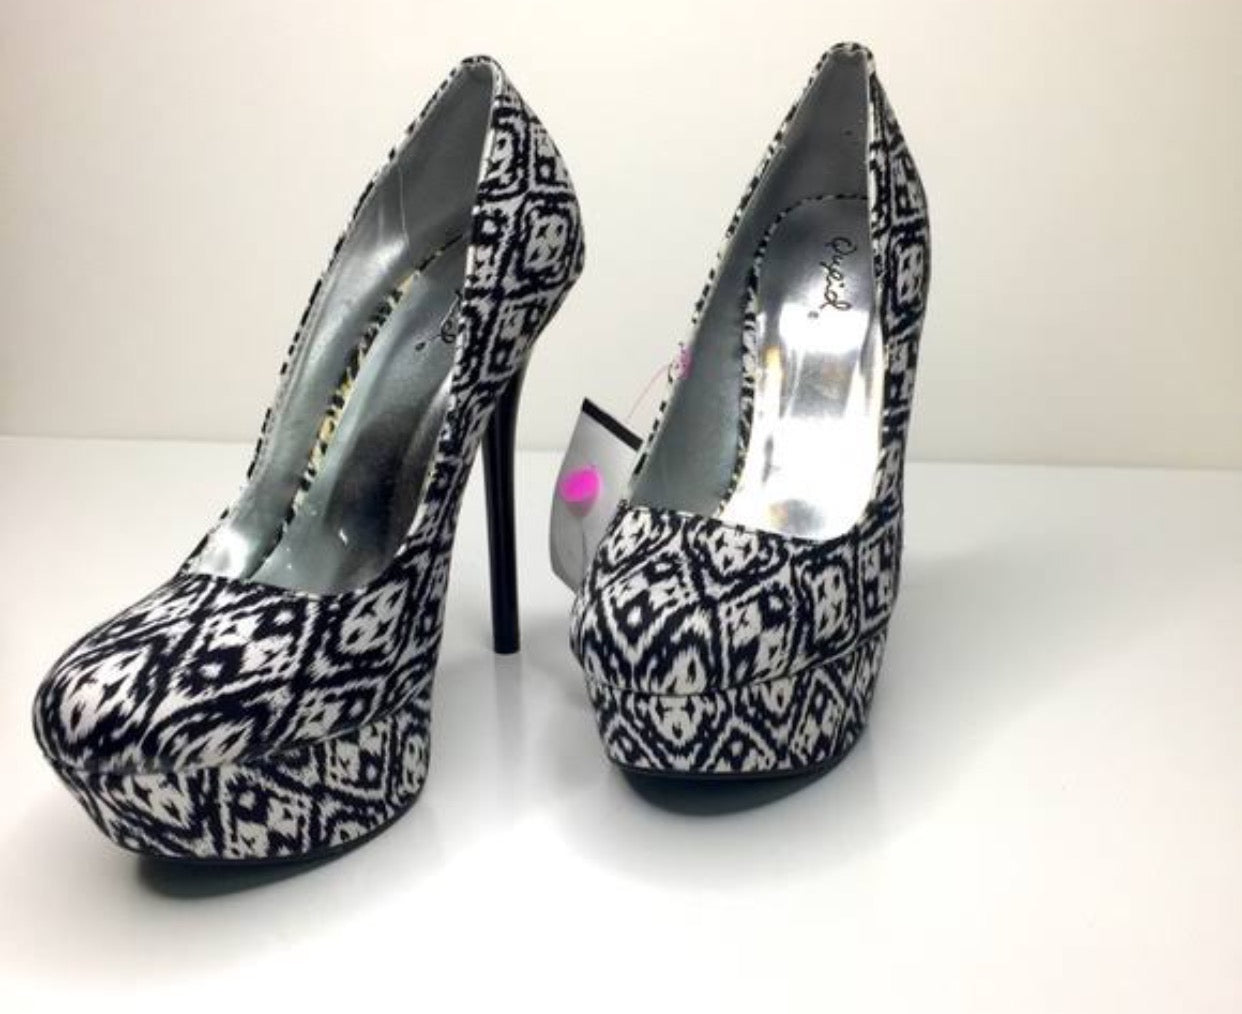 Black and white Qupid heels